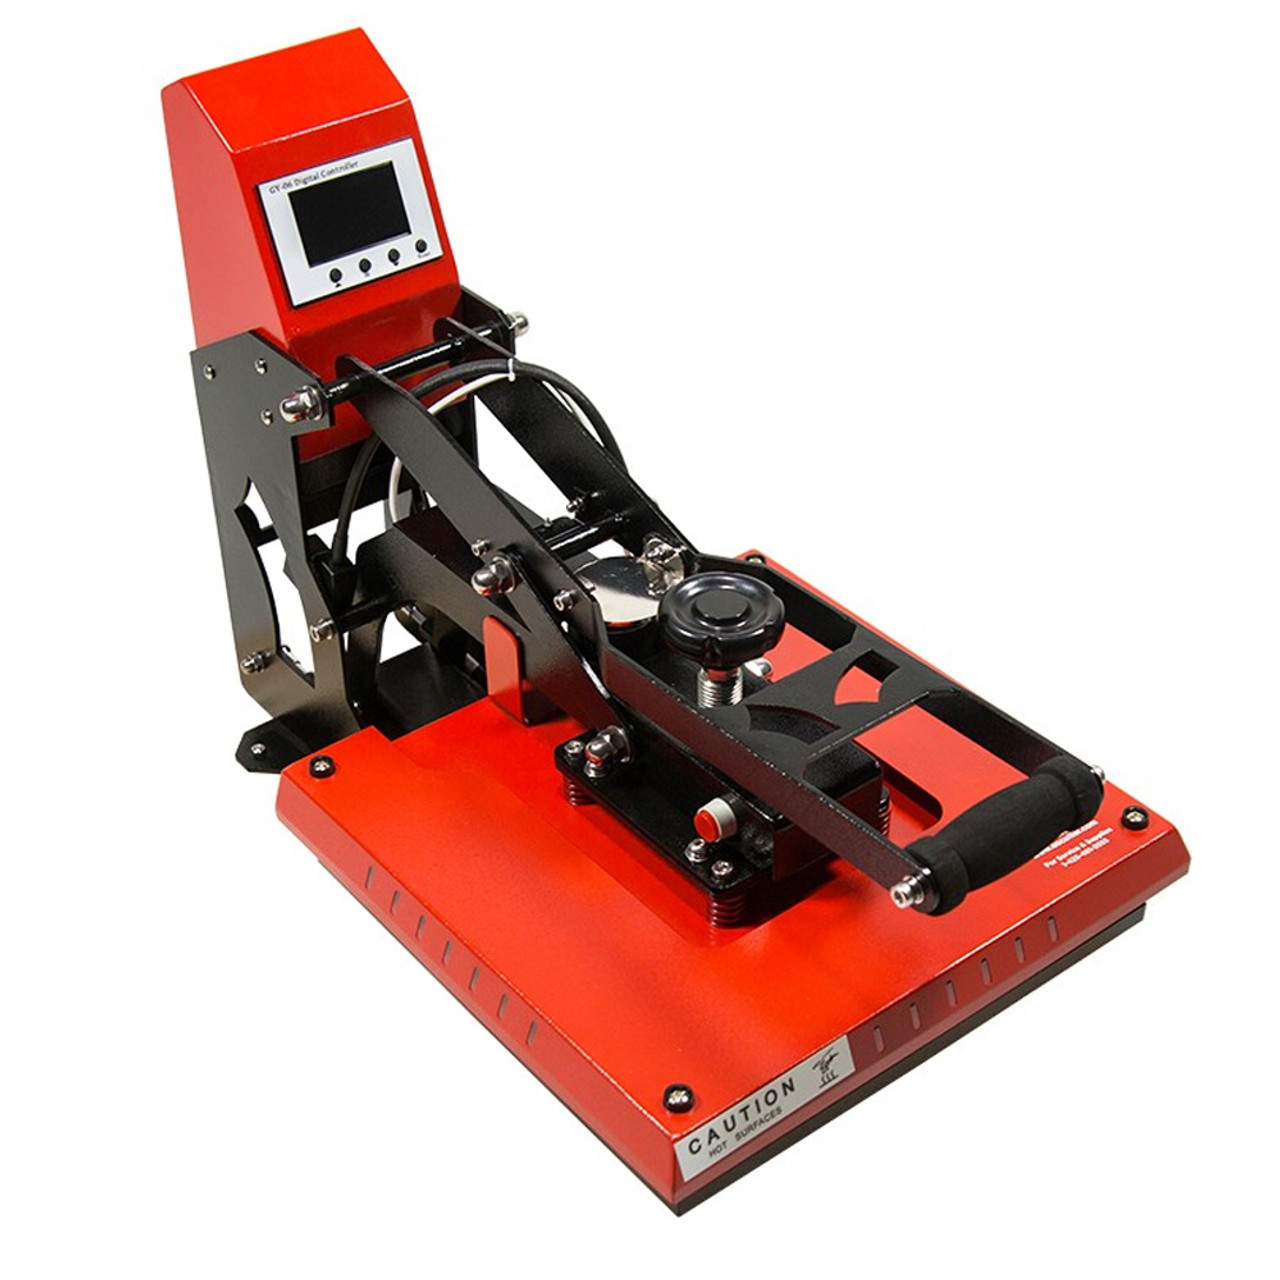 Siser Red Digital Clam Heat Press, 15 x 15